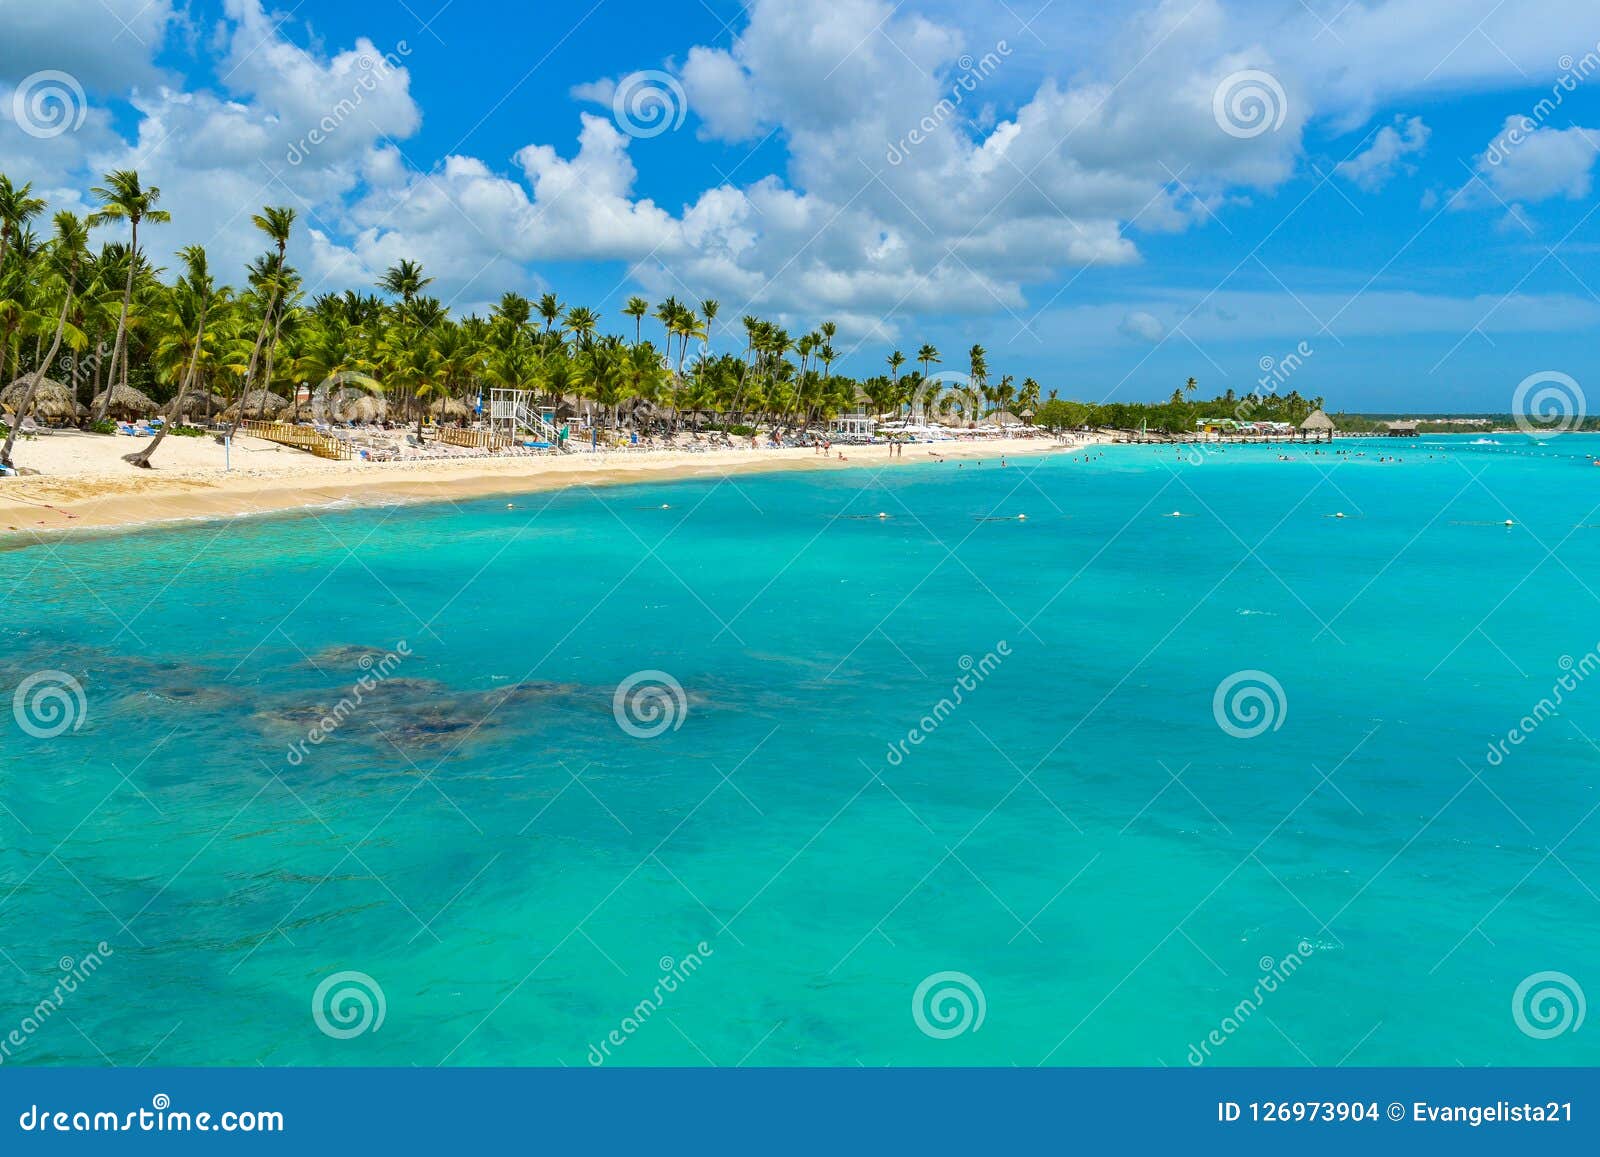 bayahibe beach in dominican republic